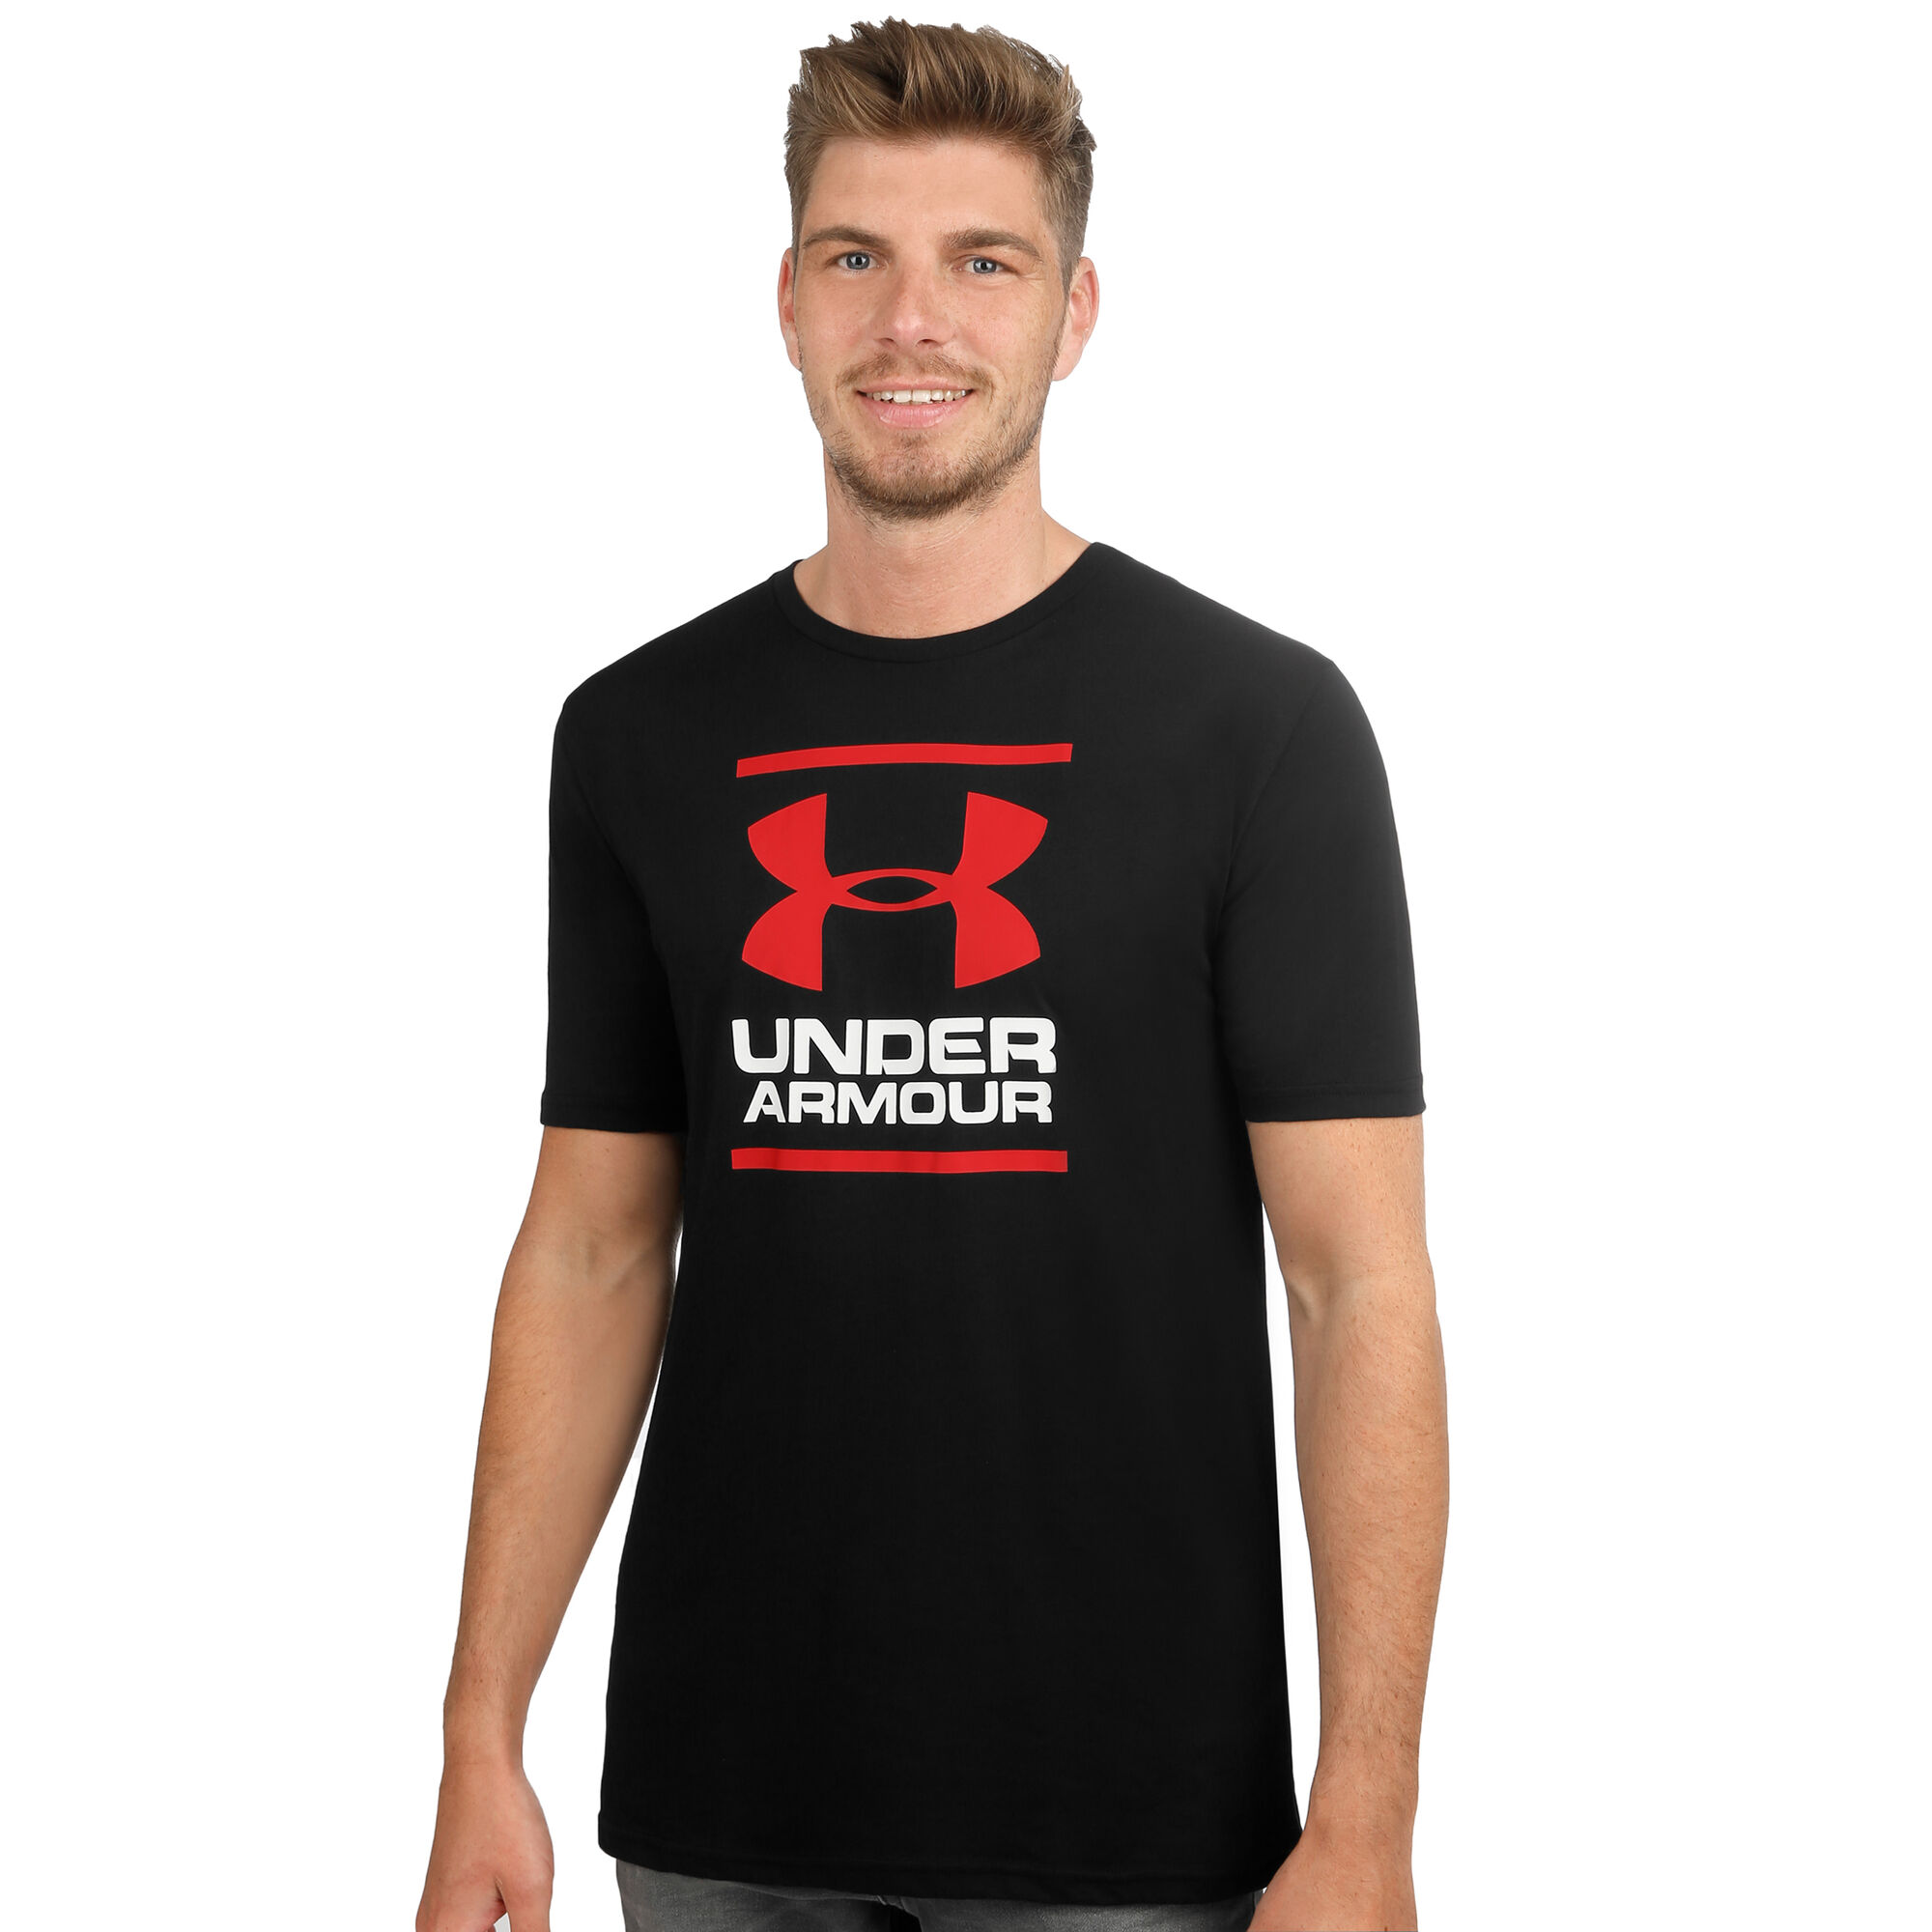 COM Buy Armour Tennis online | Point Red T-Shirt Foundation GL Black, Under Men